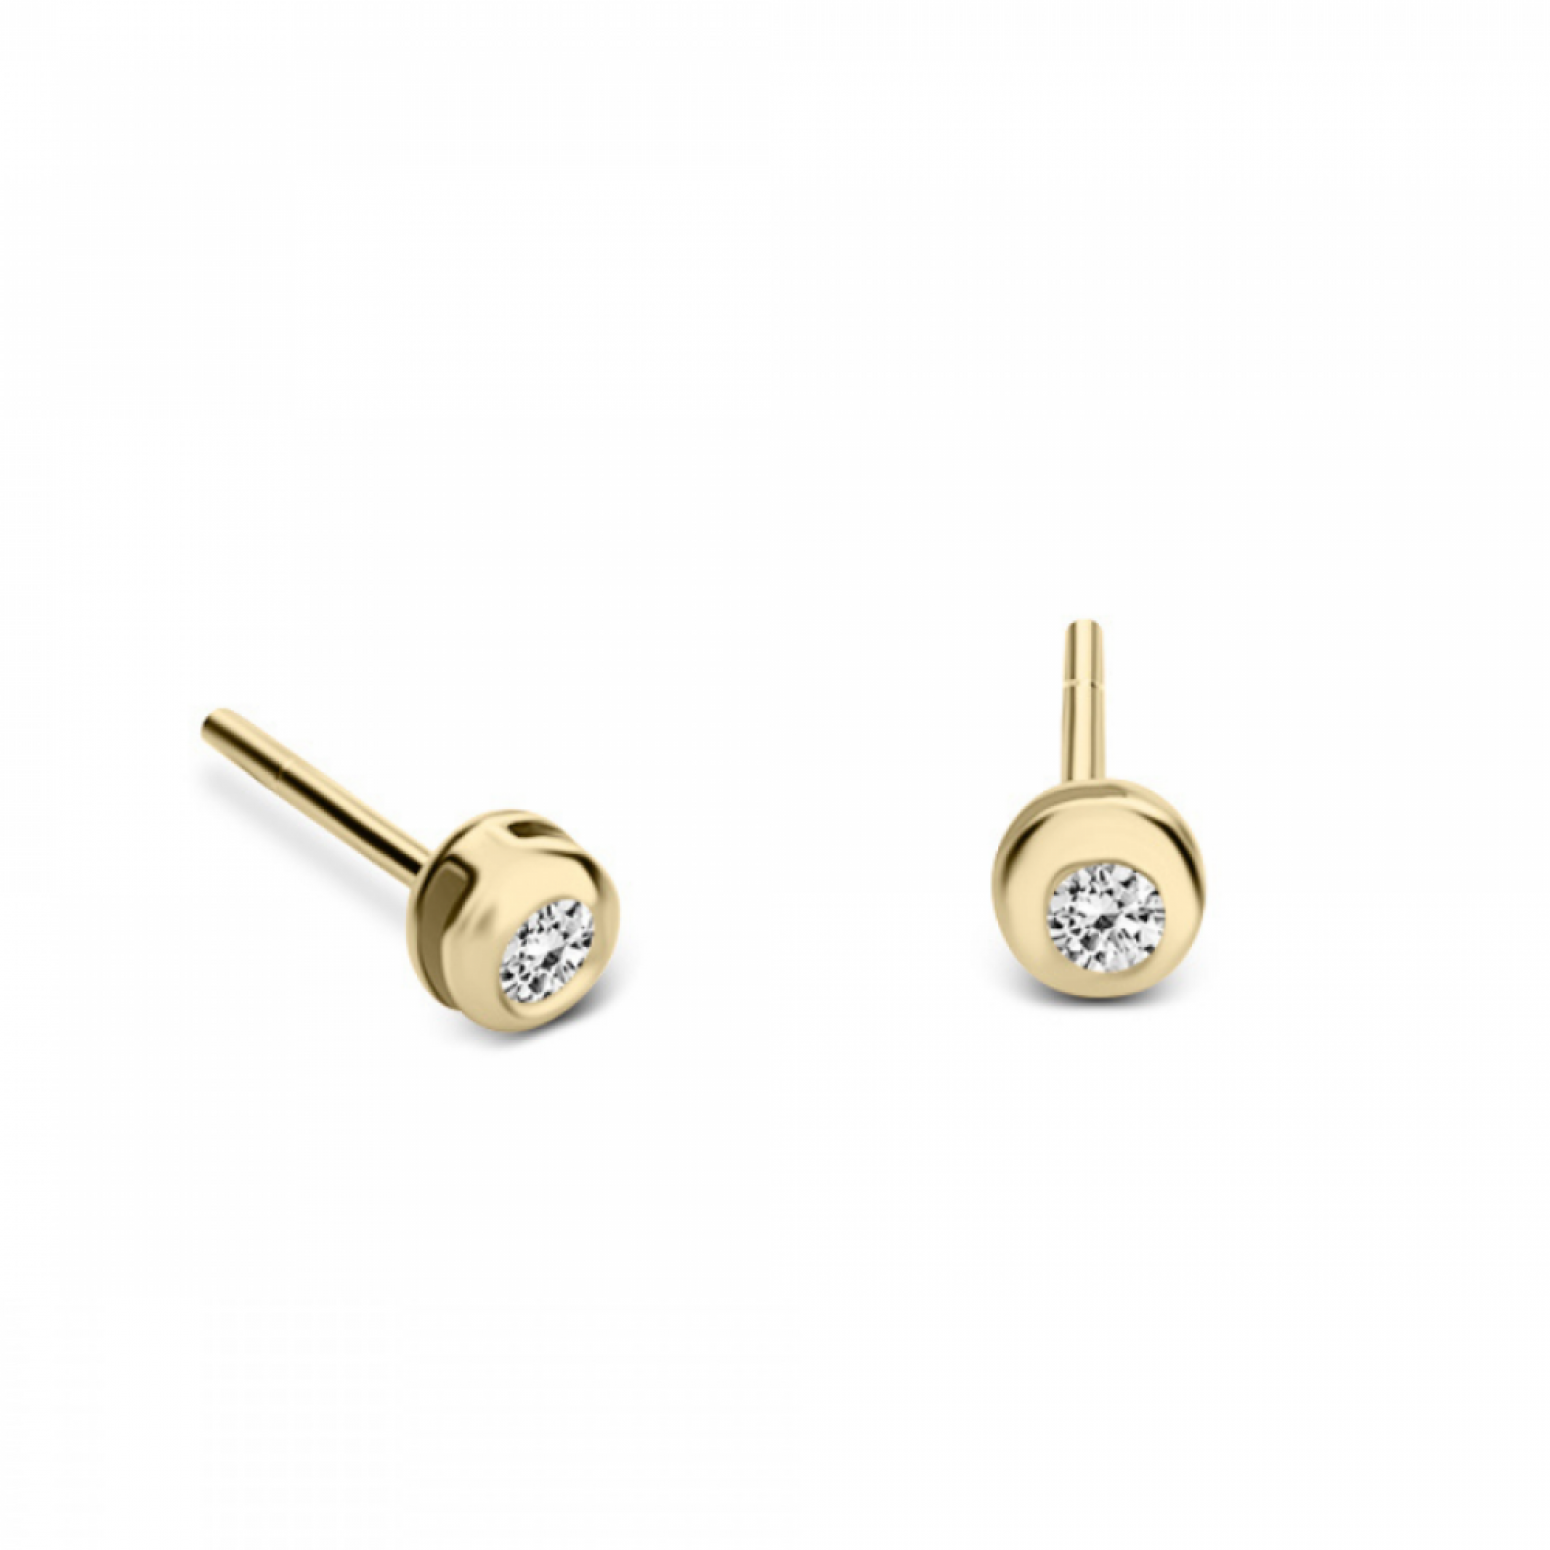 Solitaire earrings 9K gold with zircon, sk3499 EARRINGS Κοσμηματα - chrilia.gr